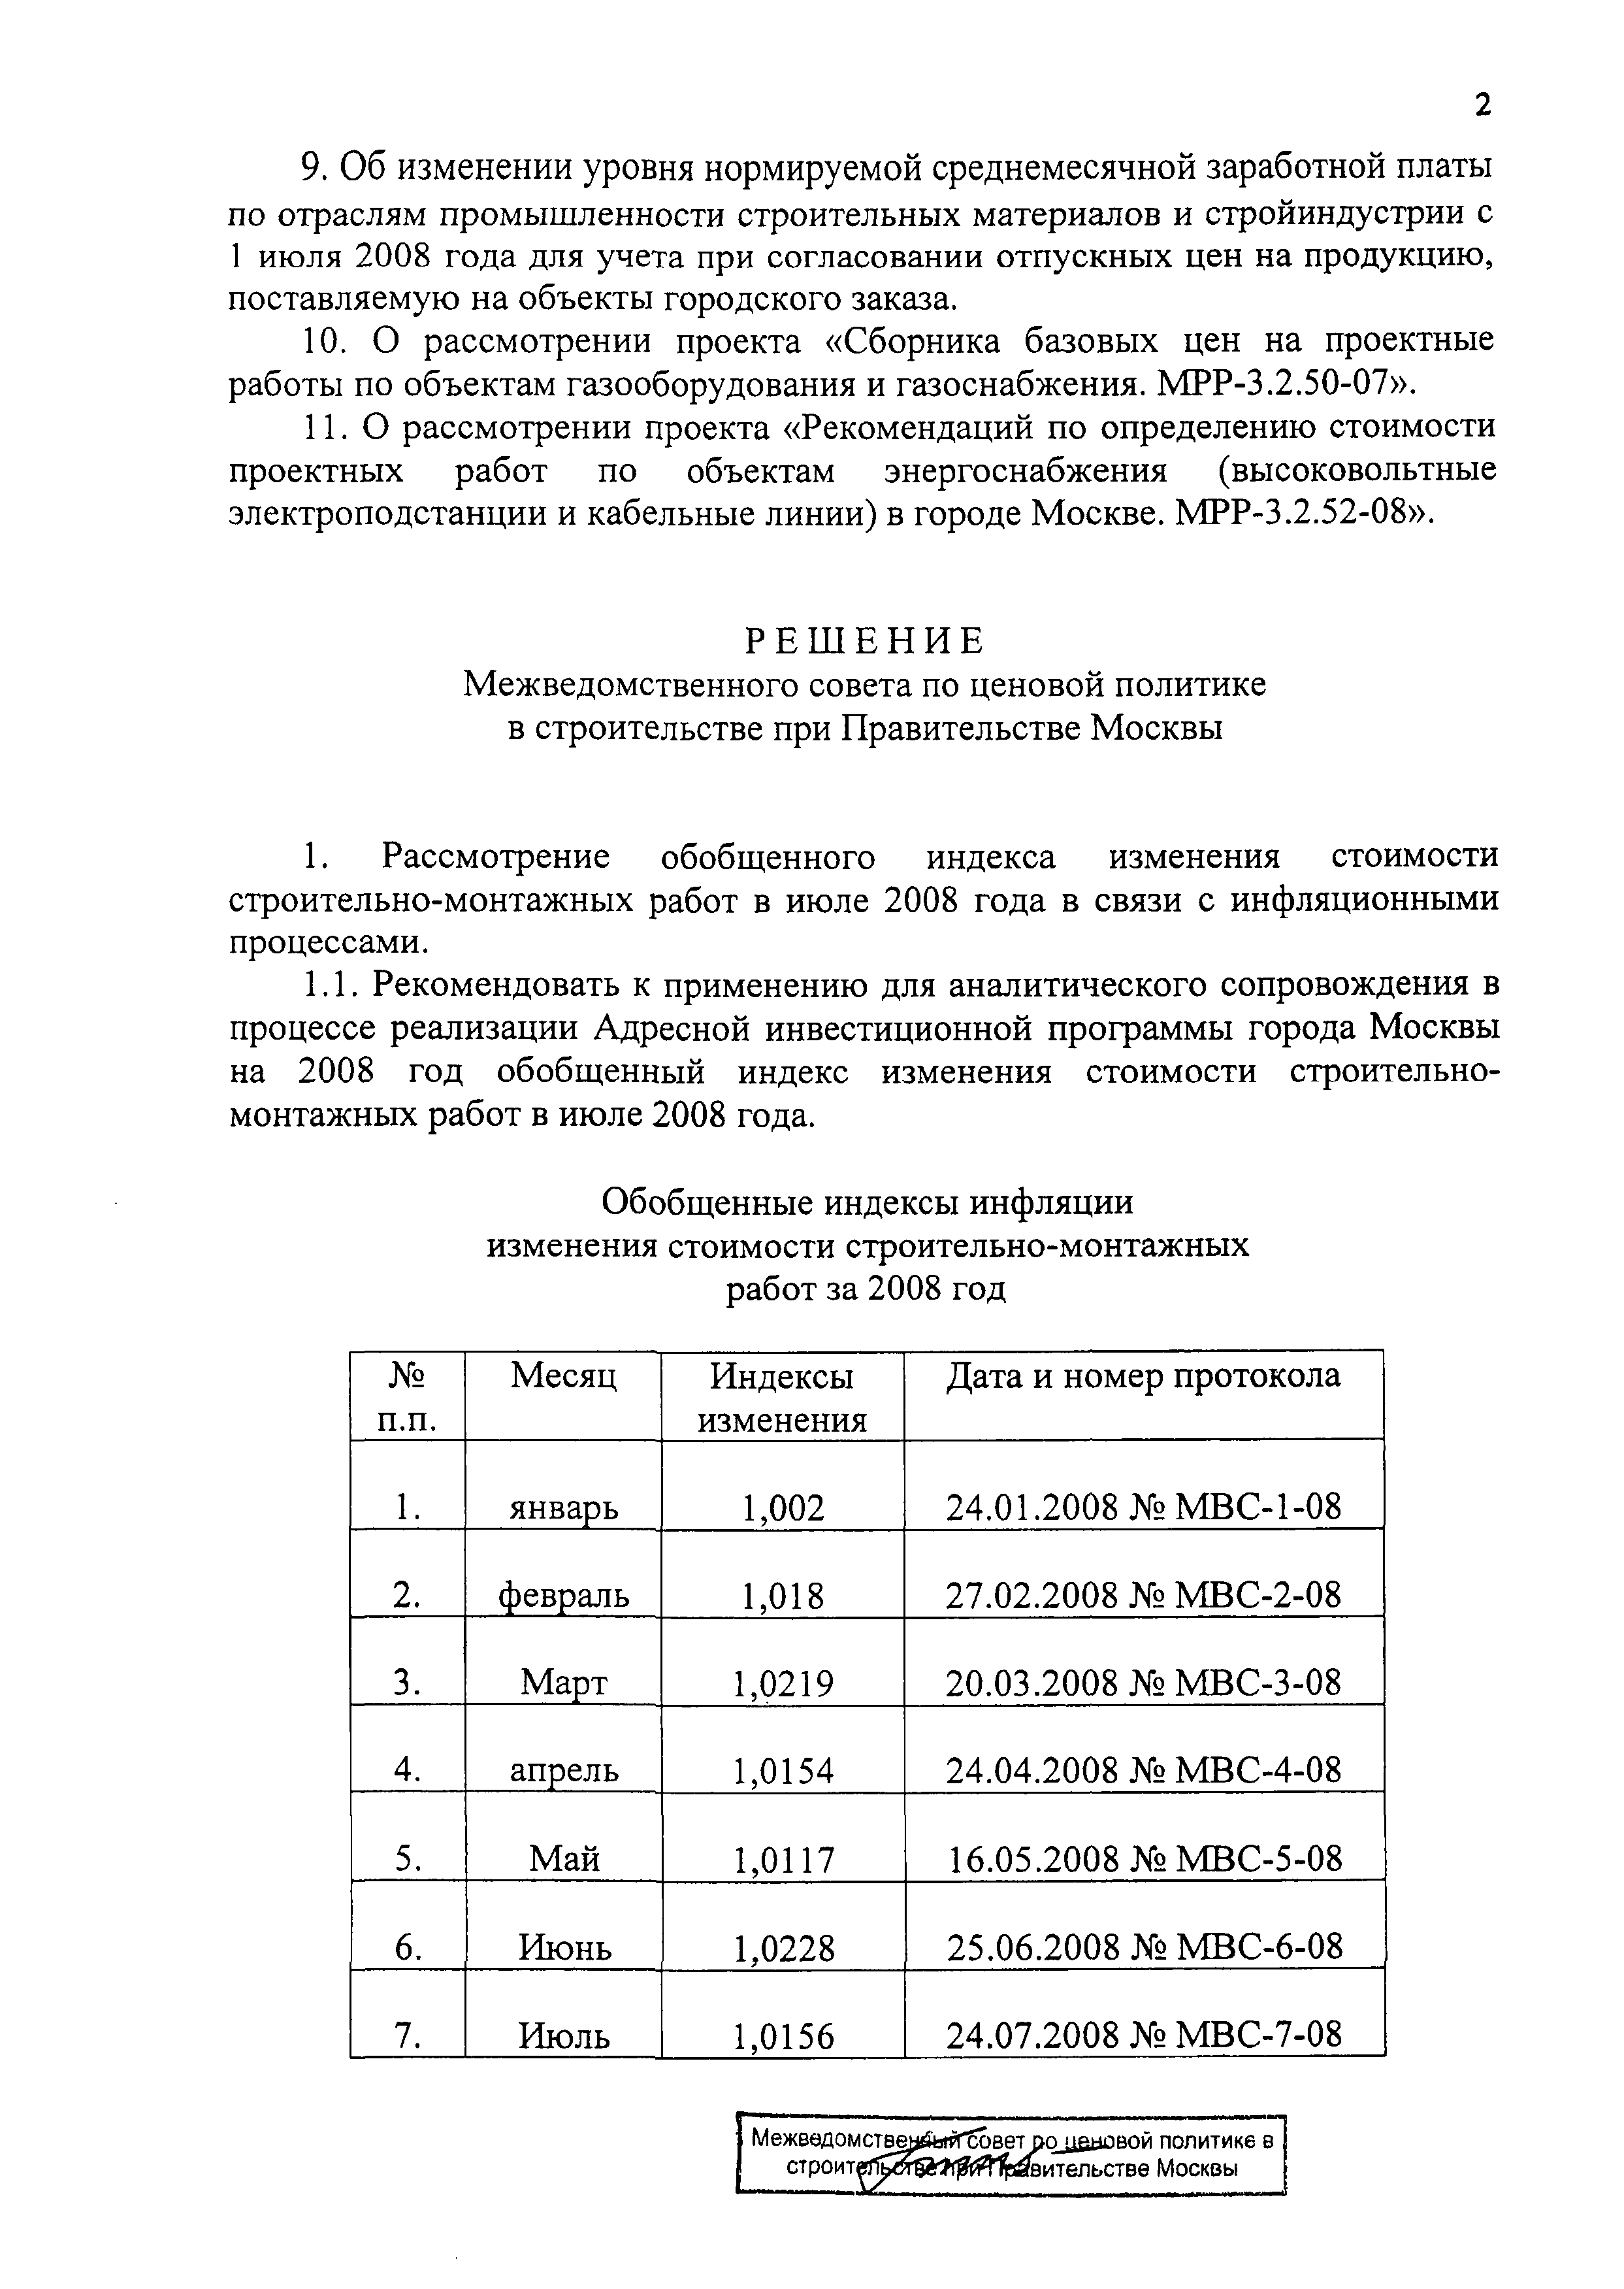 Протокол МВС-7-08